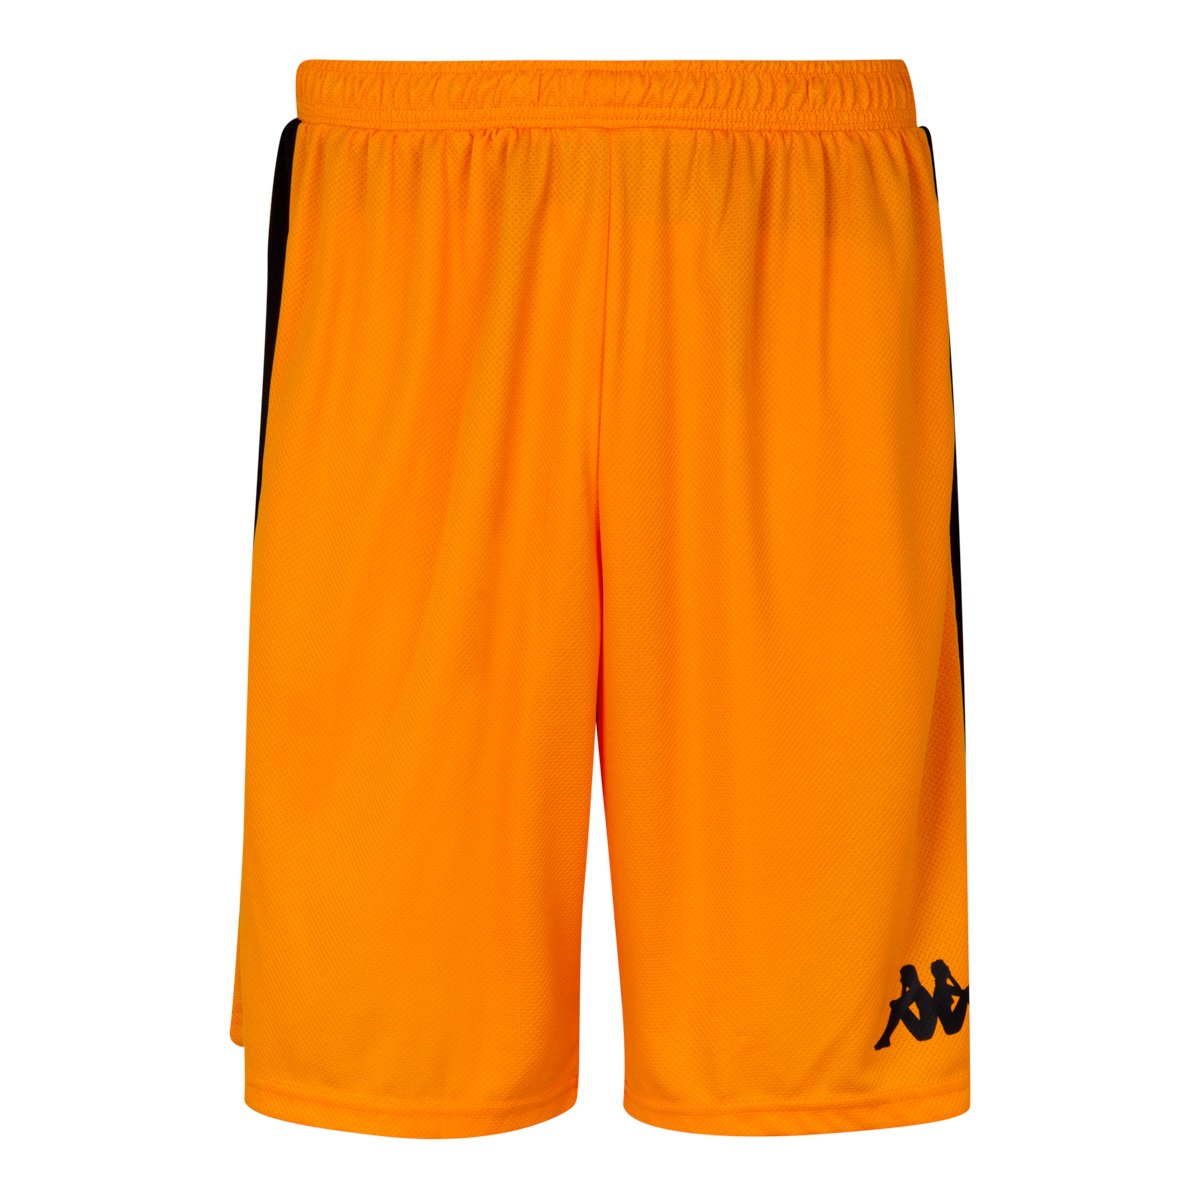 Pantalones cortes Basket Caluso Naranja Hombre - Imagen 1